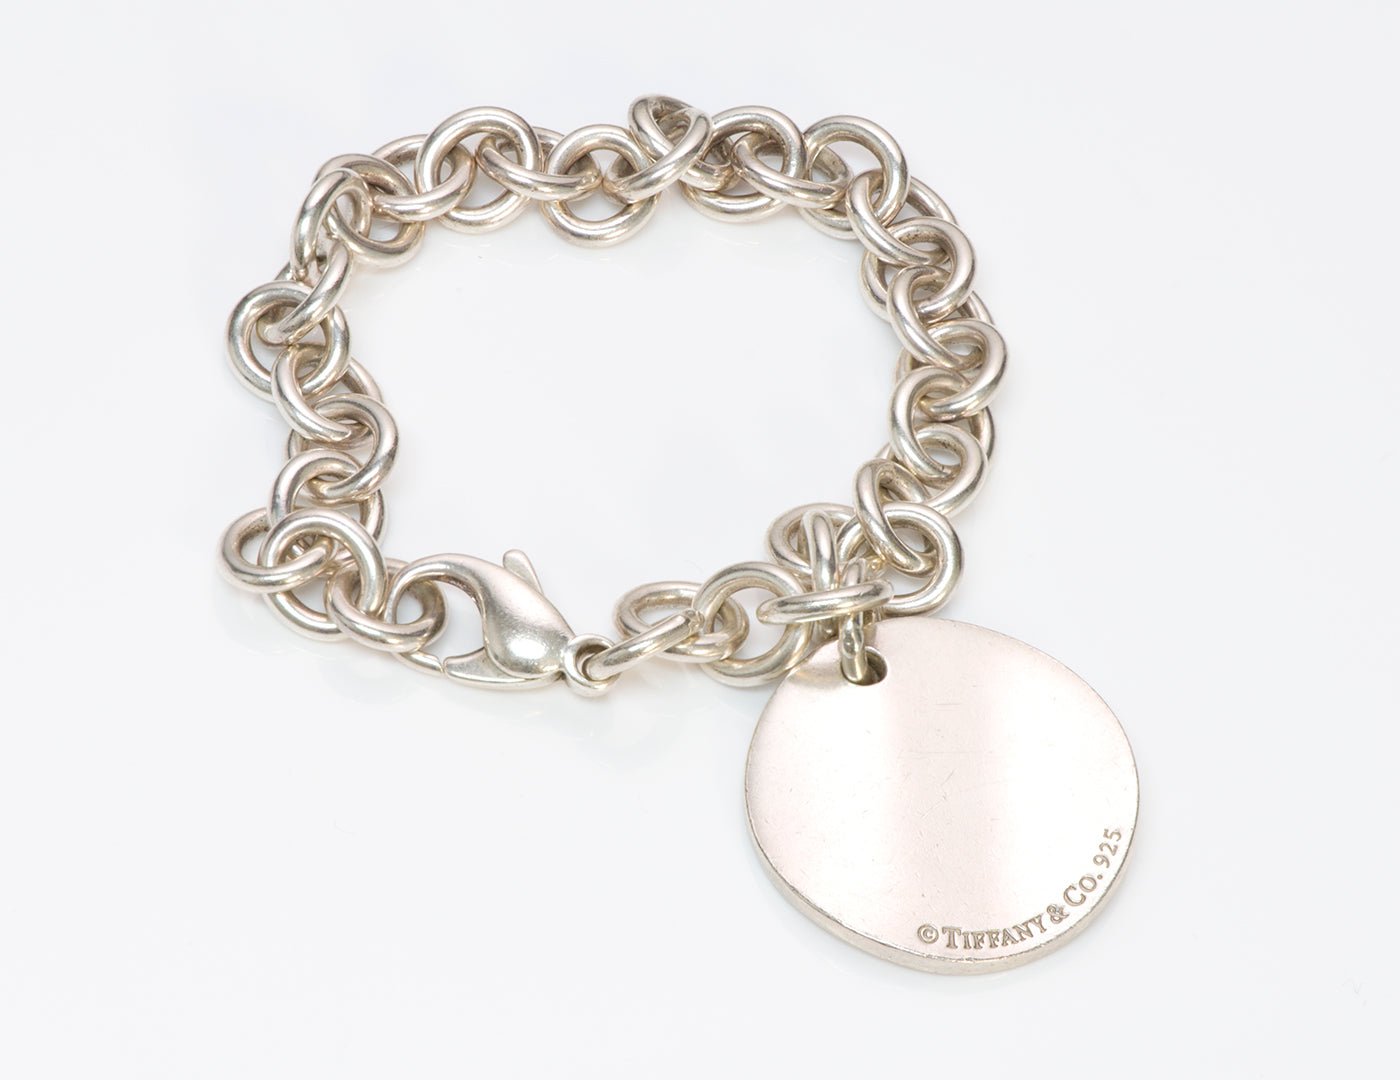 Tiffany & Co. Fifth Ave 727 Silver Charm Bracelet